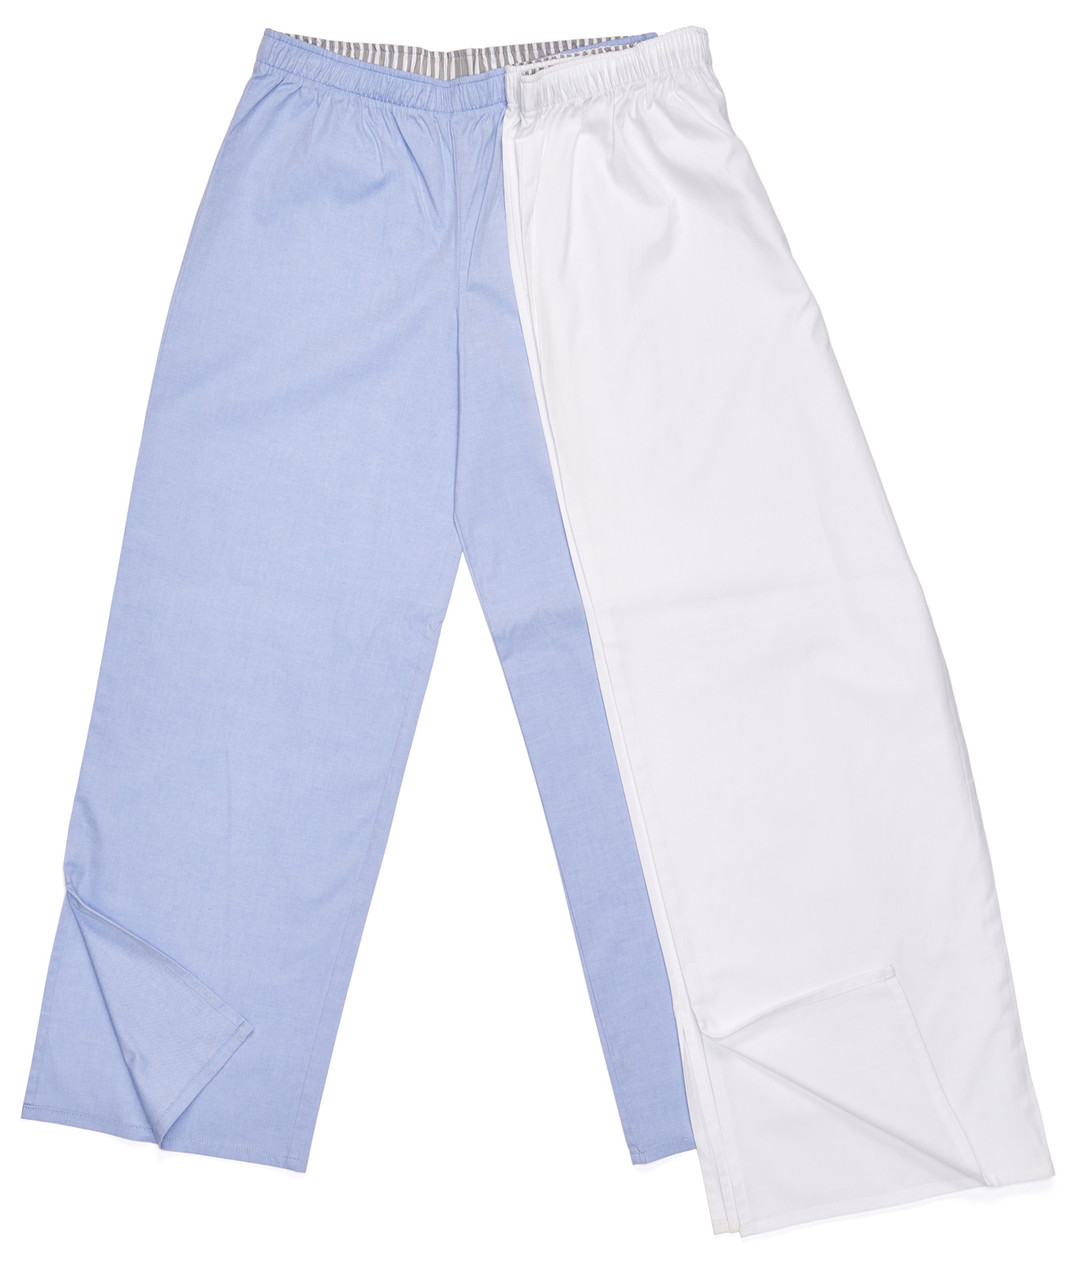 Cotton Pajama Pants - Blue/White/Striped - Ladies | H&M CA